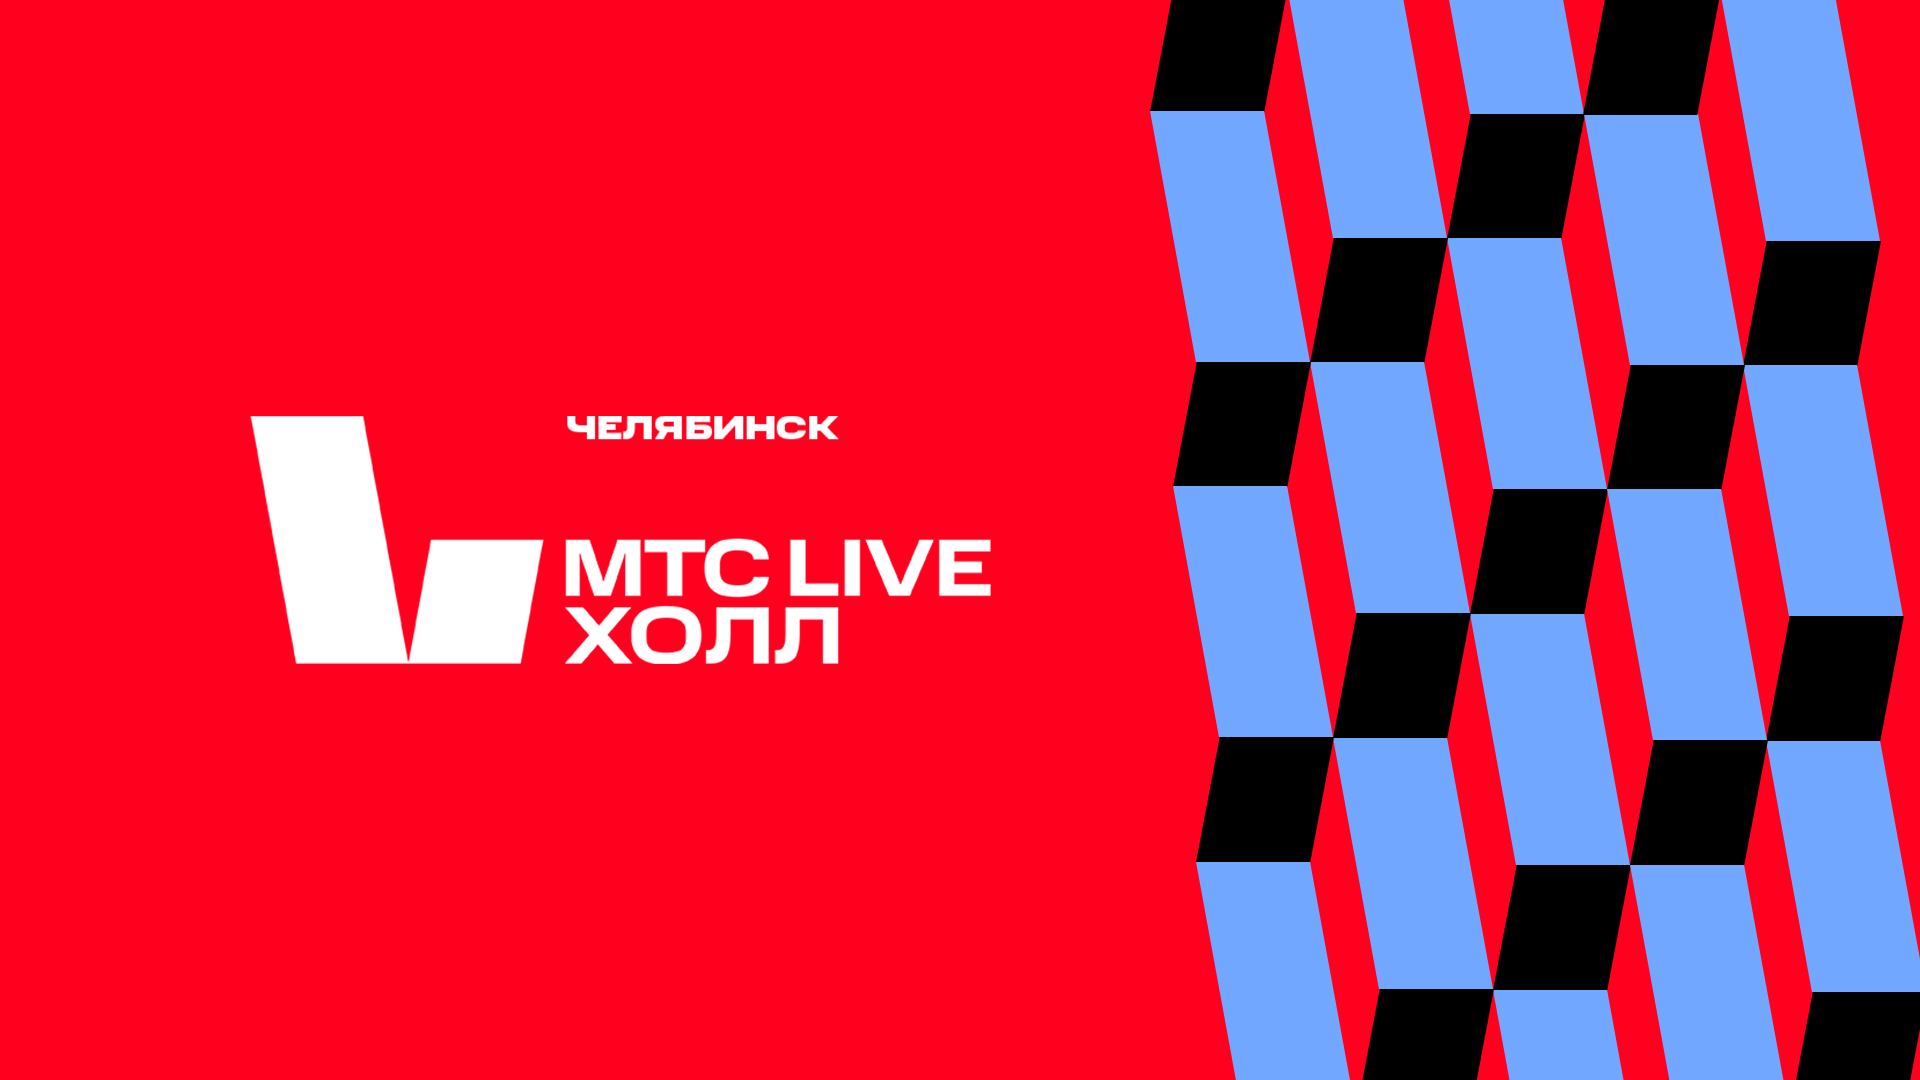 Мтс live лето. MTC Live Холл. MTS Live Hall Санкт-Петербург. МТС Live. МТС Live Hall Москва.